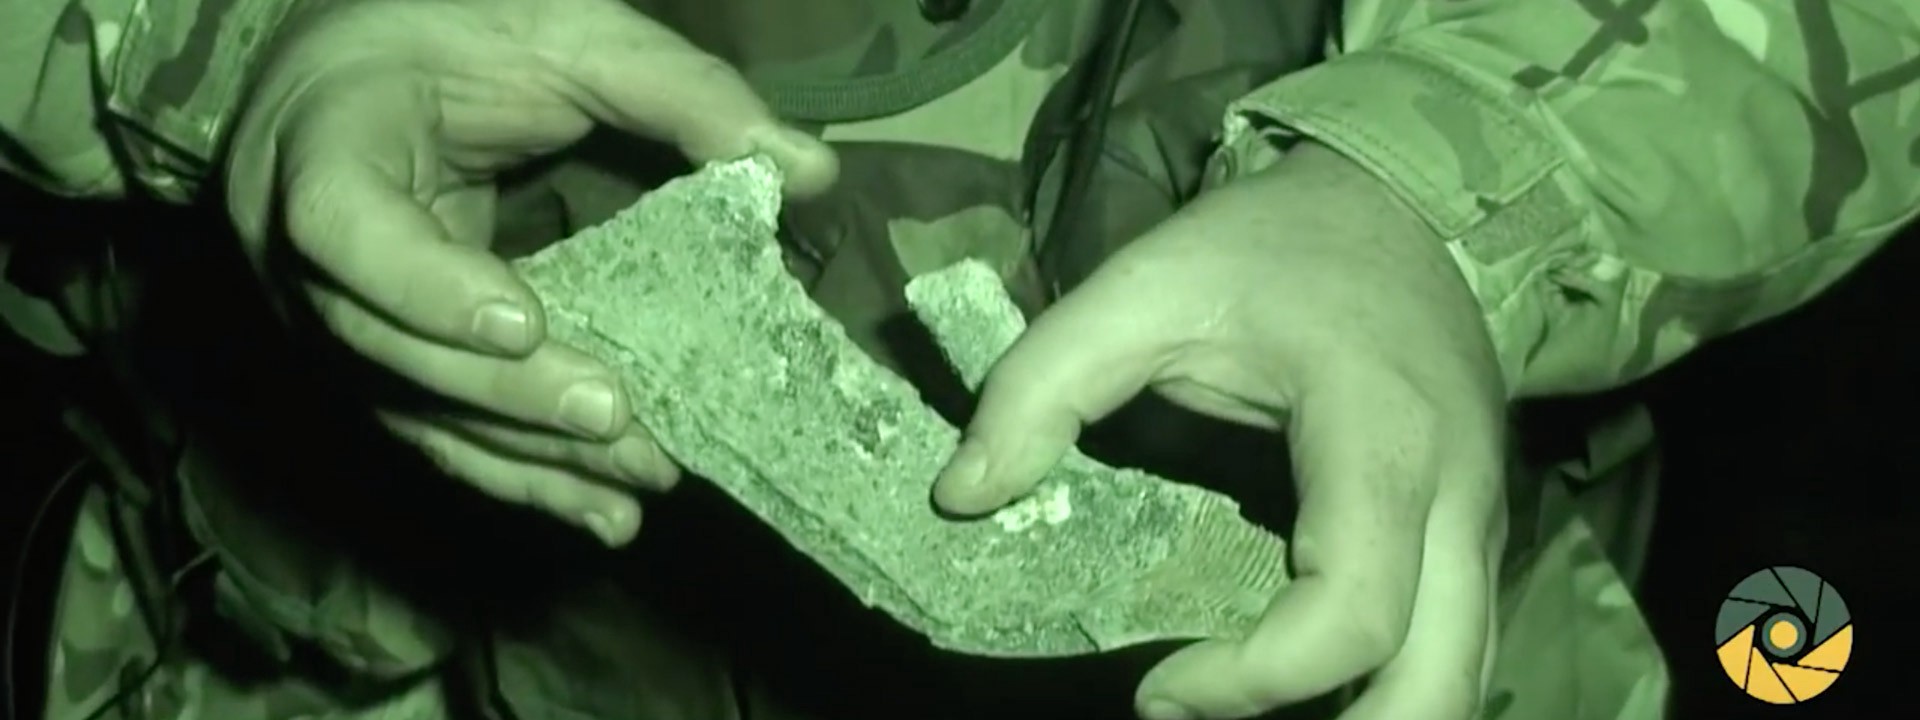 Alleged Use of Phosphorus Grenades in Ukraine